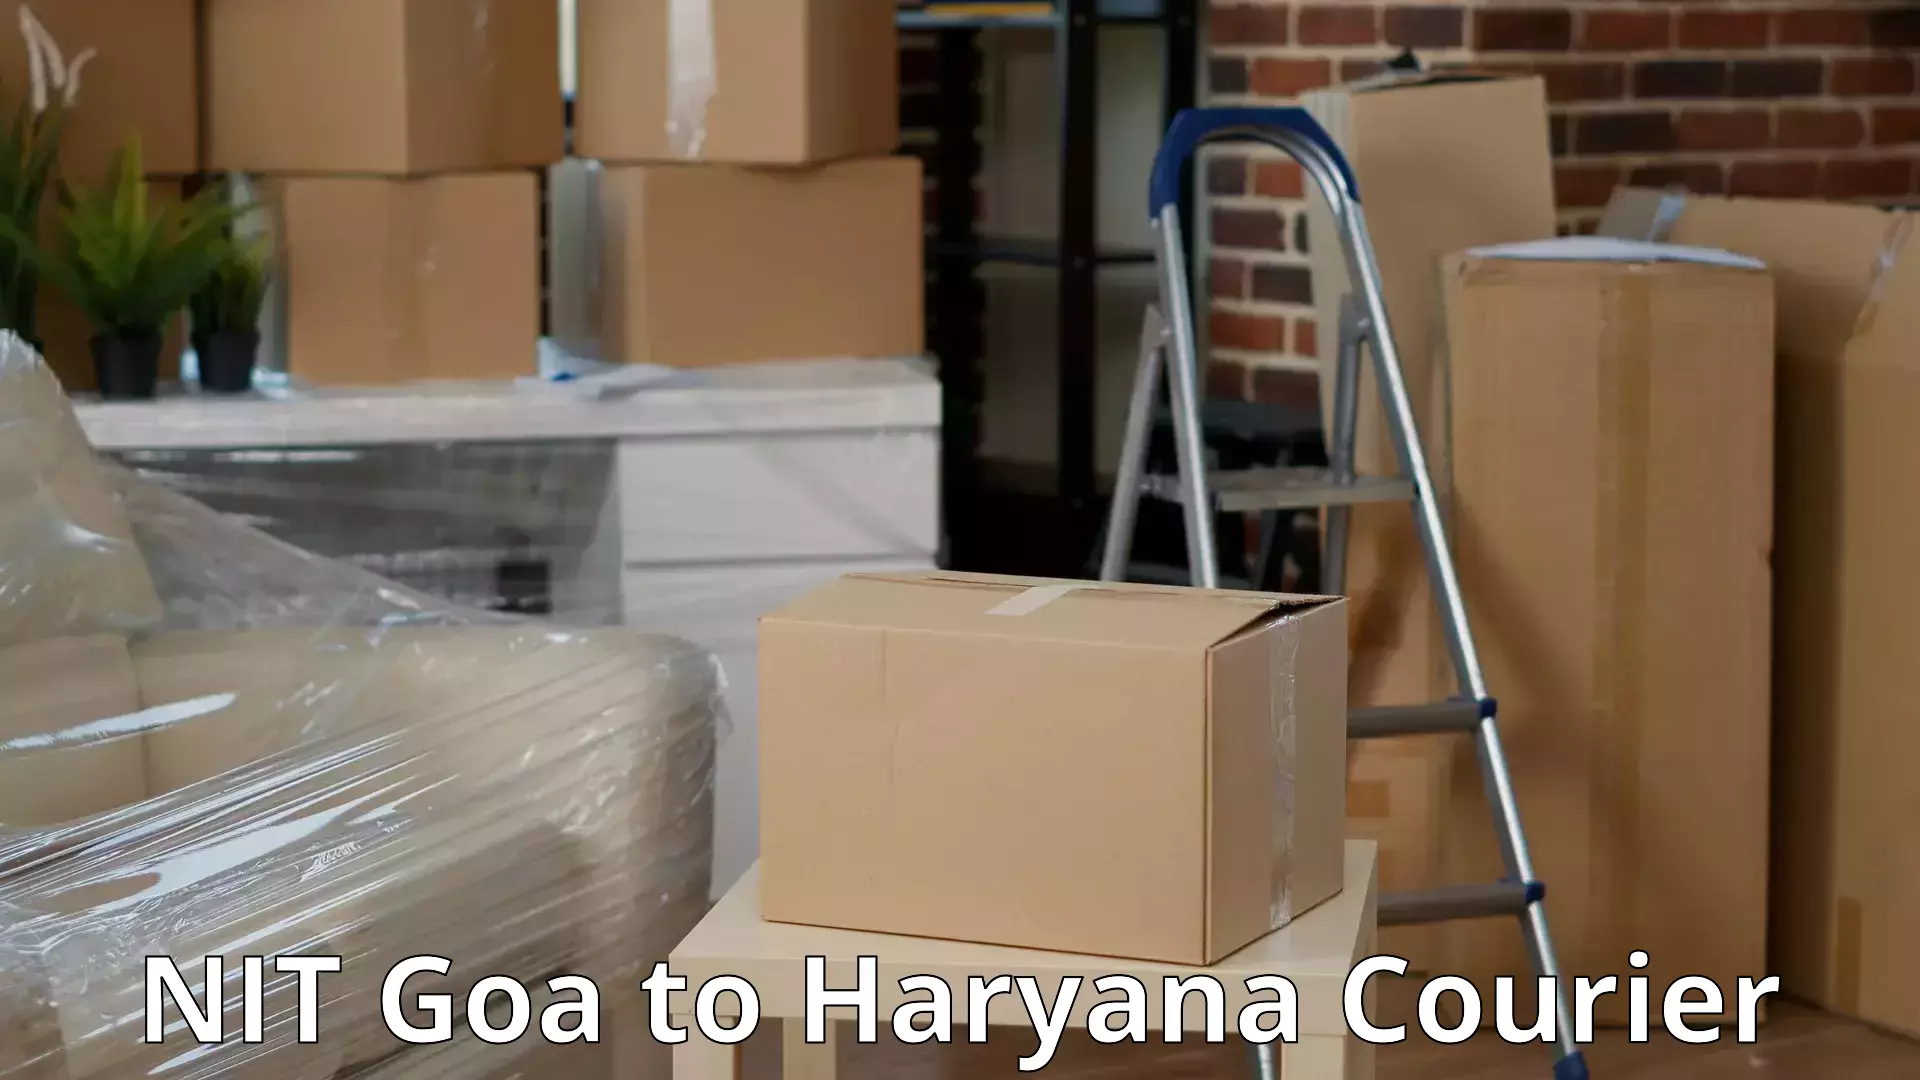 Premium moving services NIT Goa to Hansi